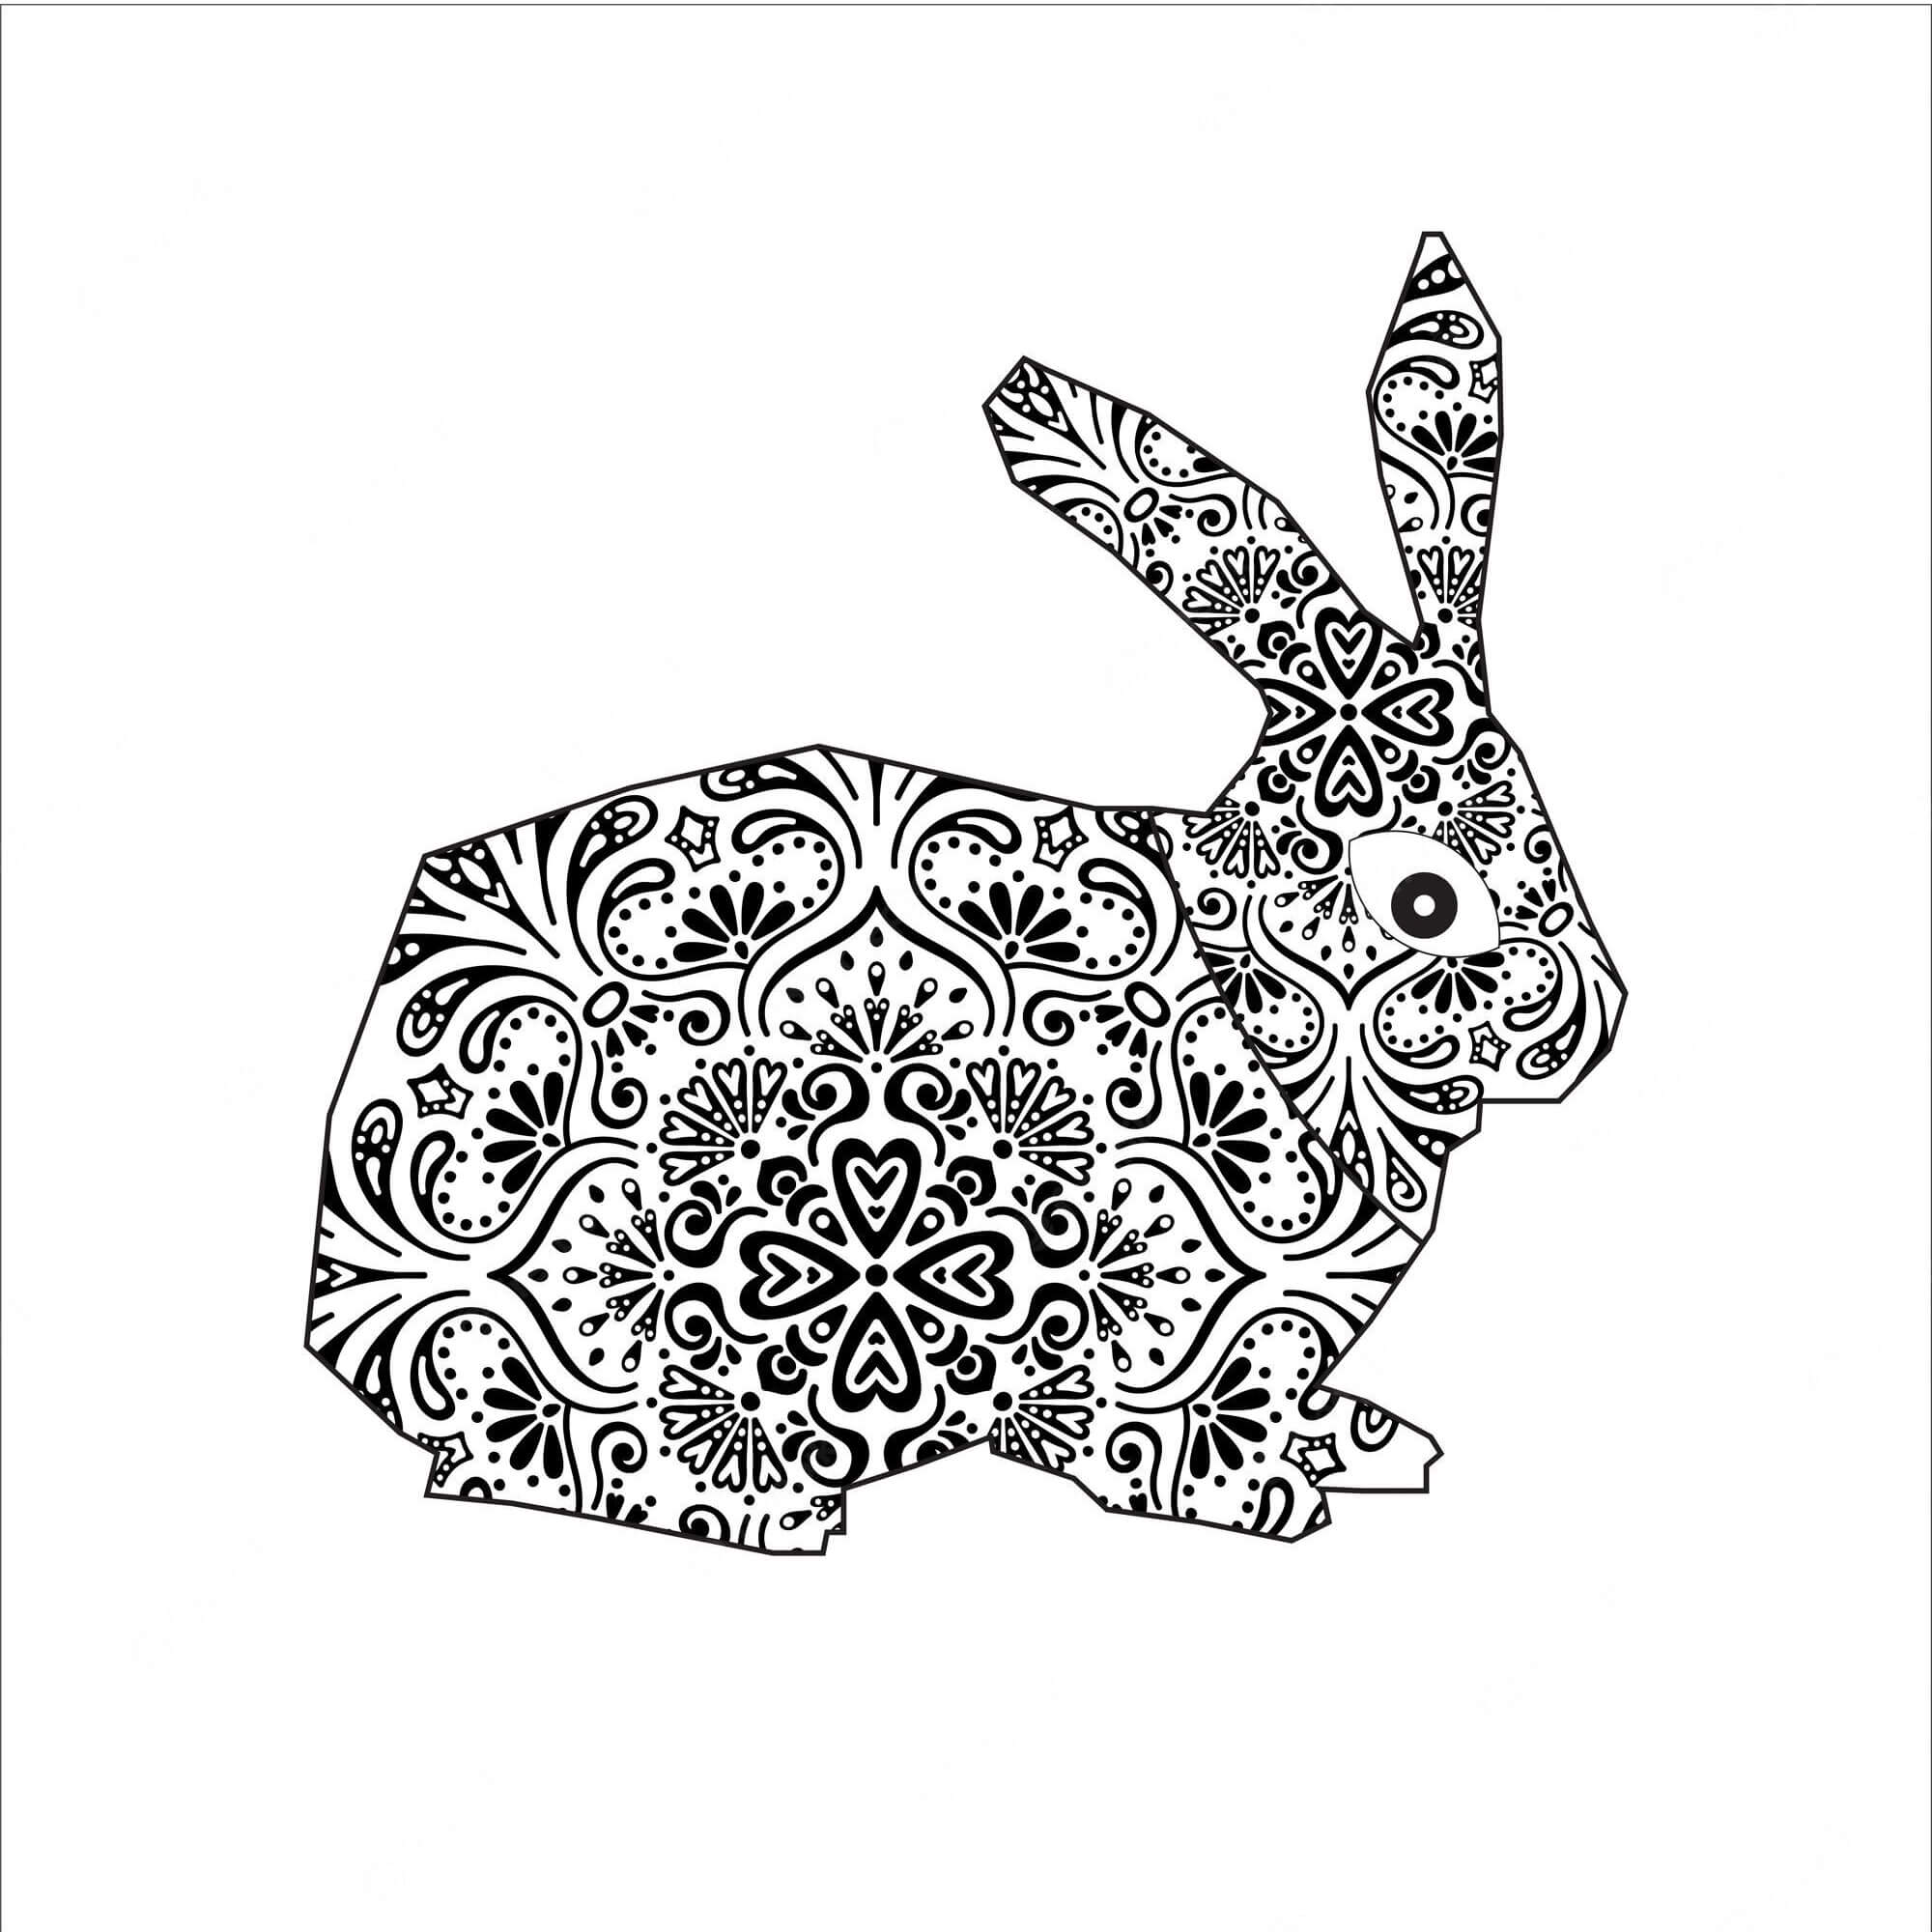 Mandala Rabbit Coloring Page - Sheet 3 Mandalas